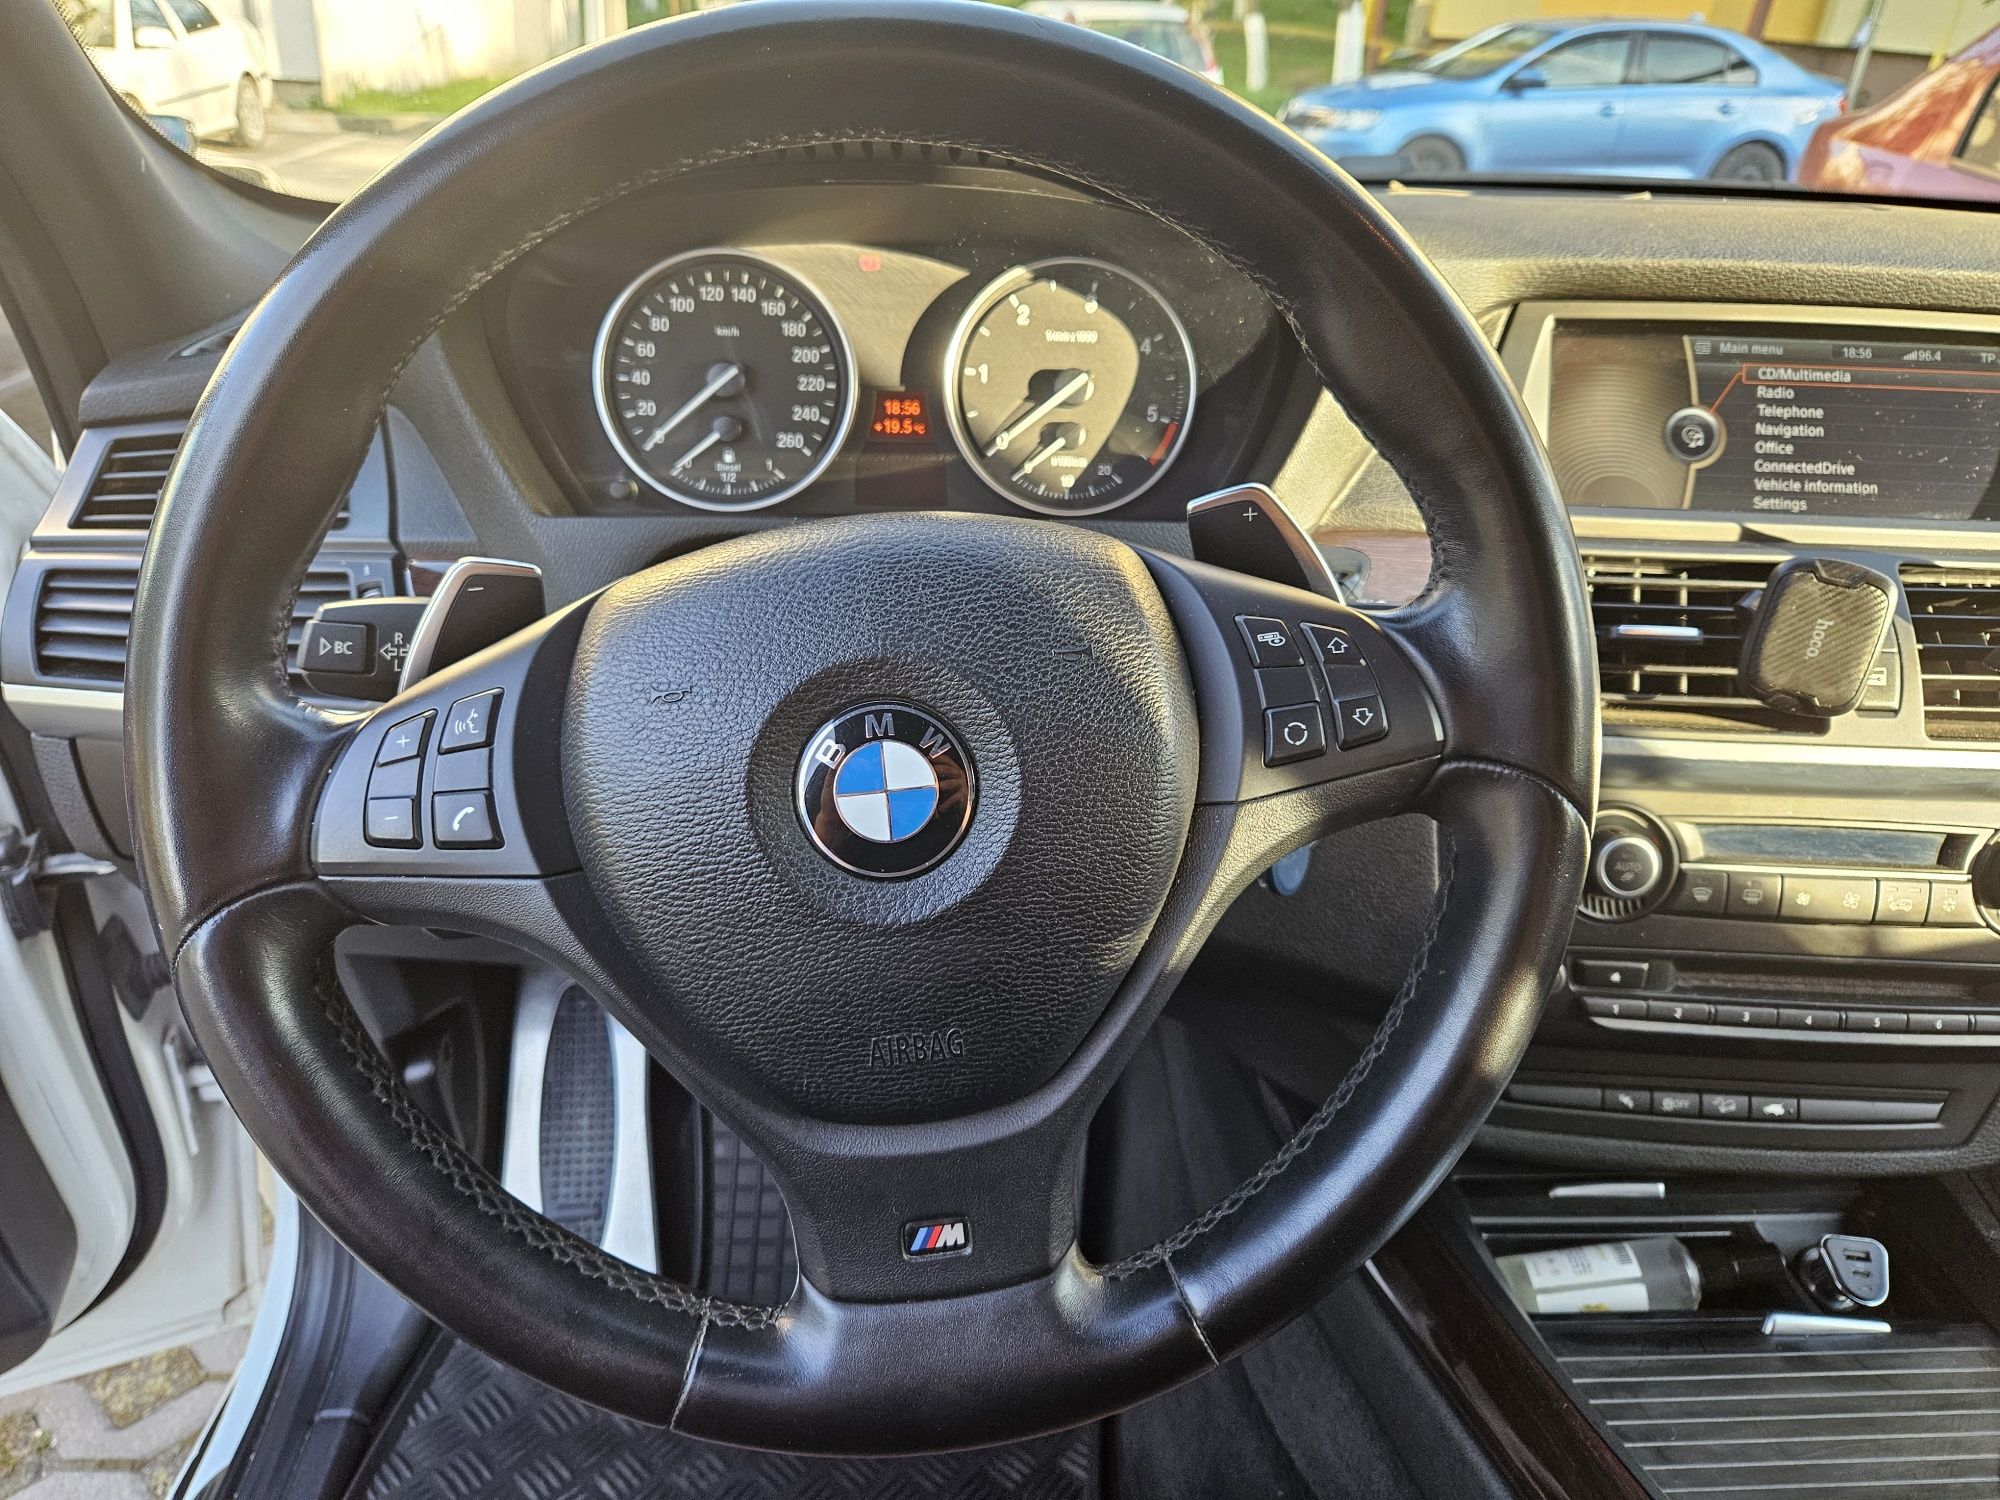 BMW X5 M 4.0d e70 FACELIFT  X-DRIVE ( 4X4 Permanent )

~ An fab